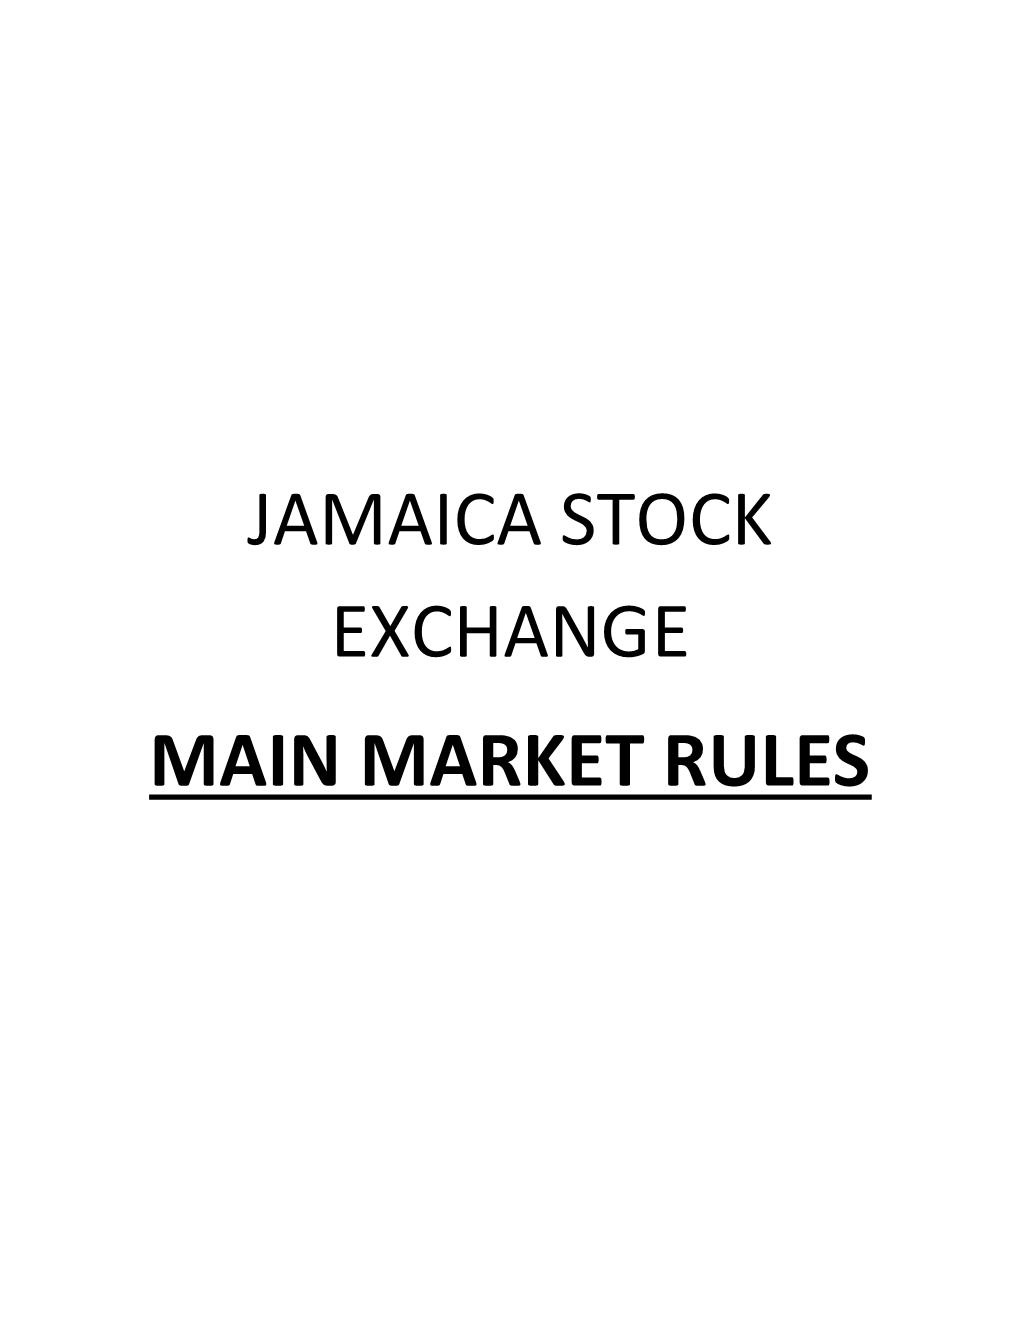 JSE Main Market Rule Book